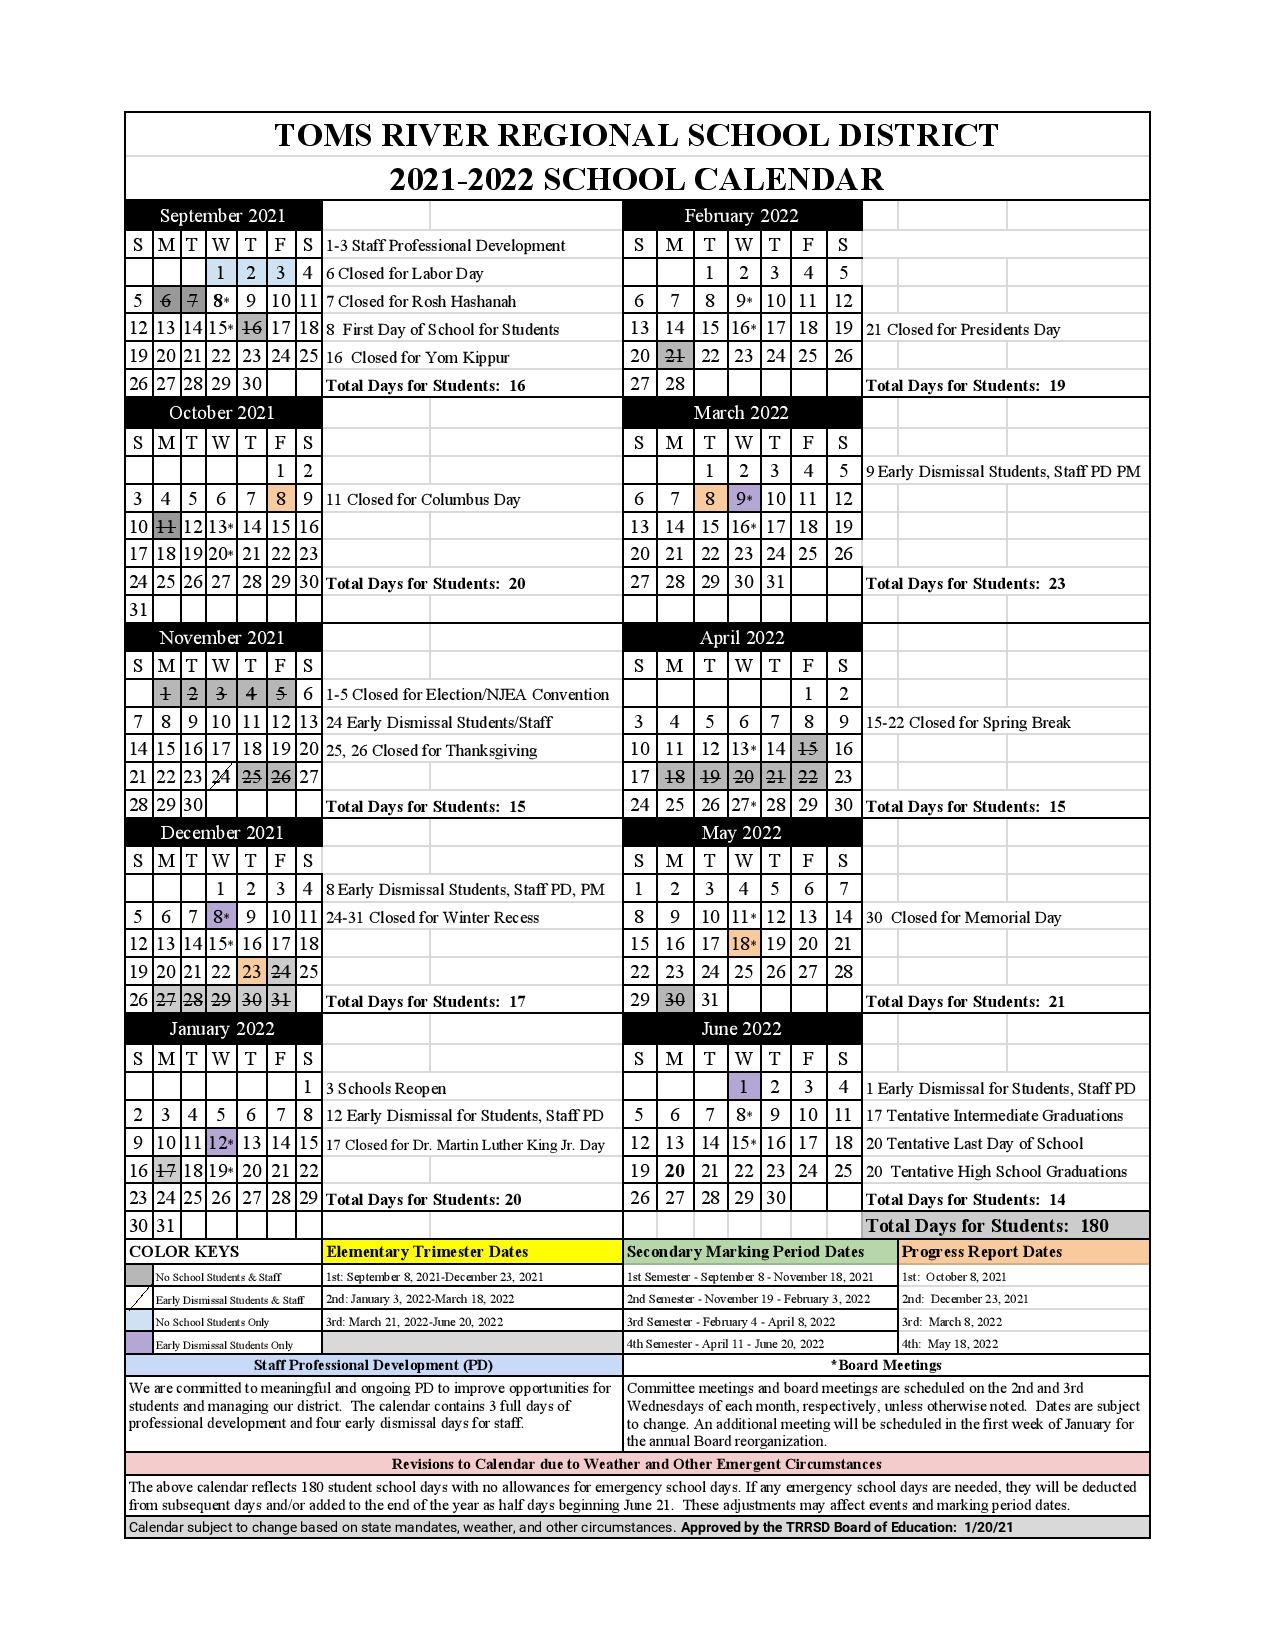 Toms River School District Calendar 2021-2022 In Pdf